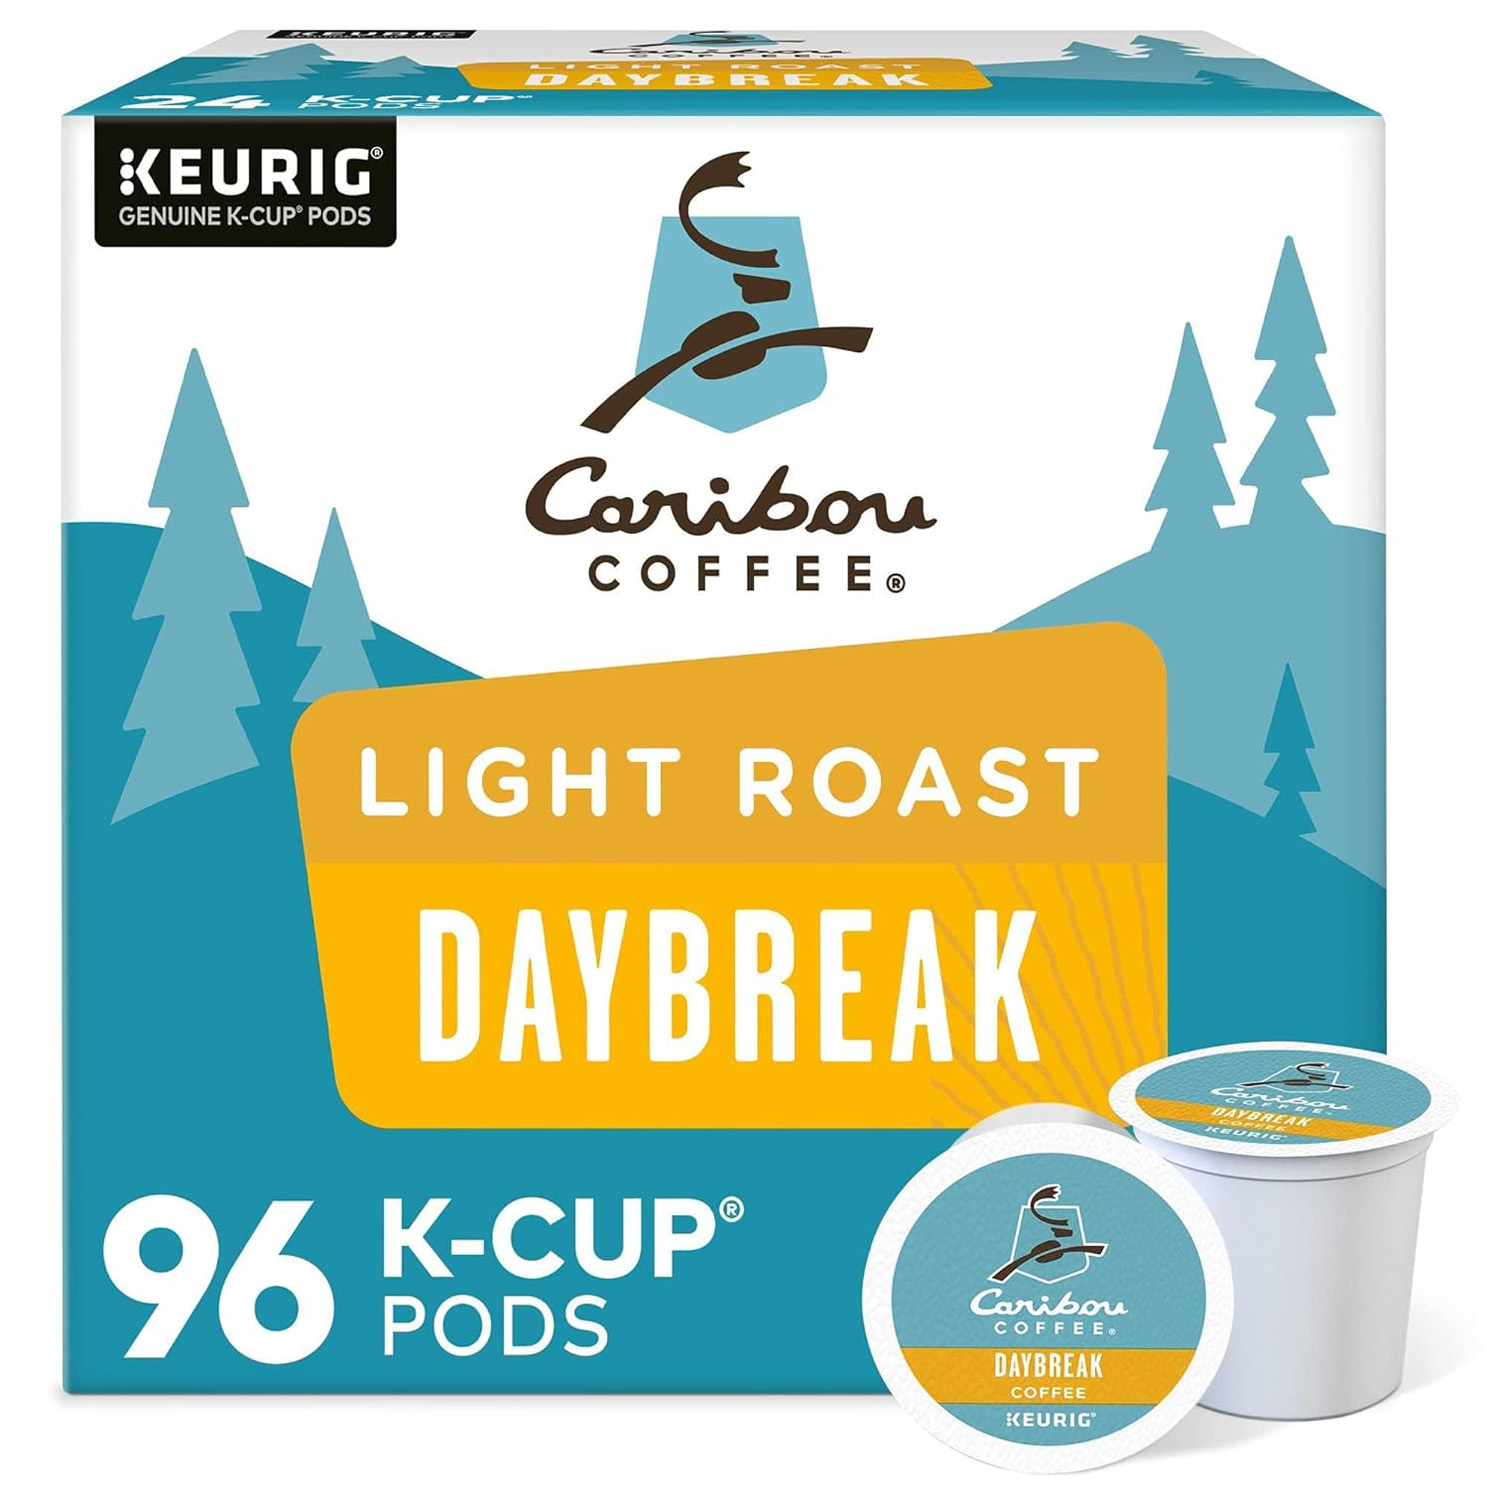 Caribou Coffee Daybreak Morning Blend, Single-Serve Keurig K-Cup Pods, Light Roast Coffee